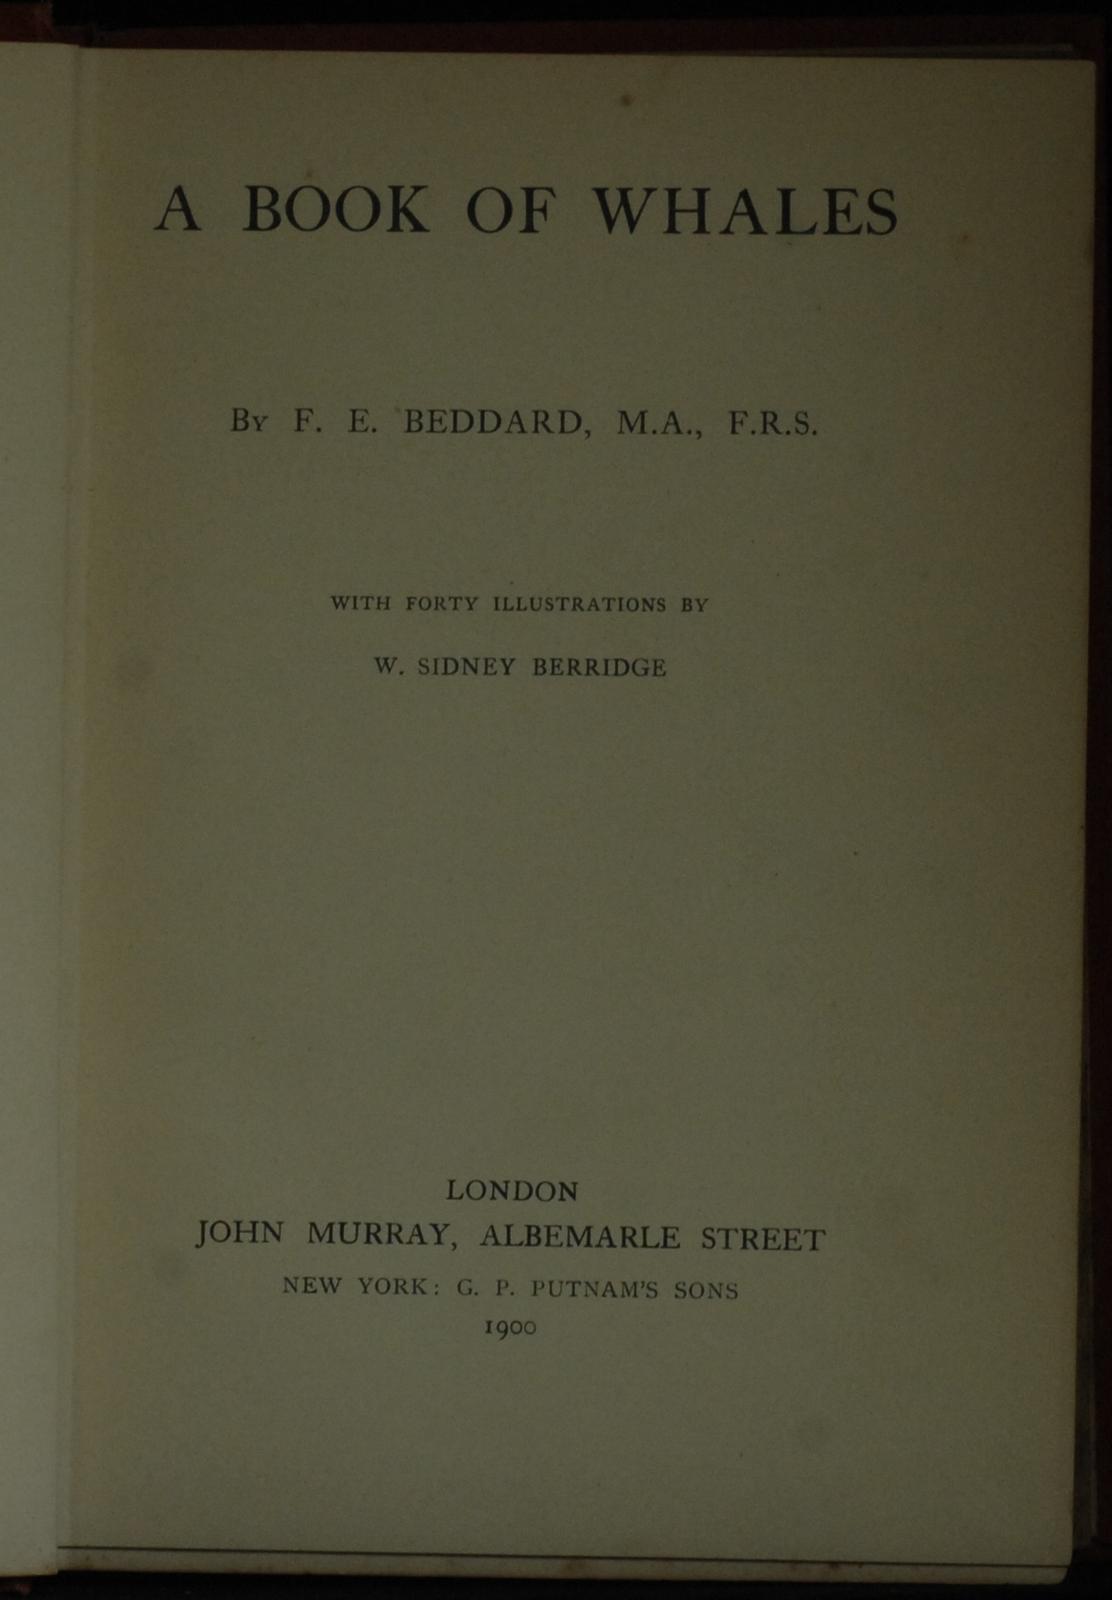 mbb006758c_-_Beddard_F_E_-_A_Book_of_Whales_-_W_SIDNEY_BERRIDGE.jpg